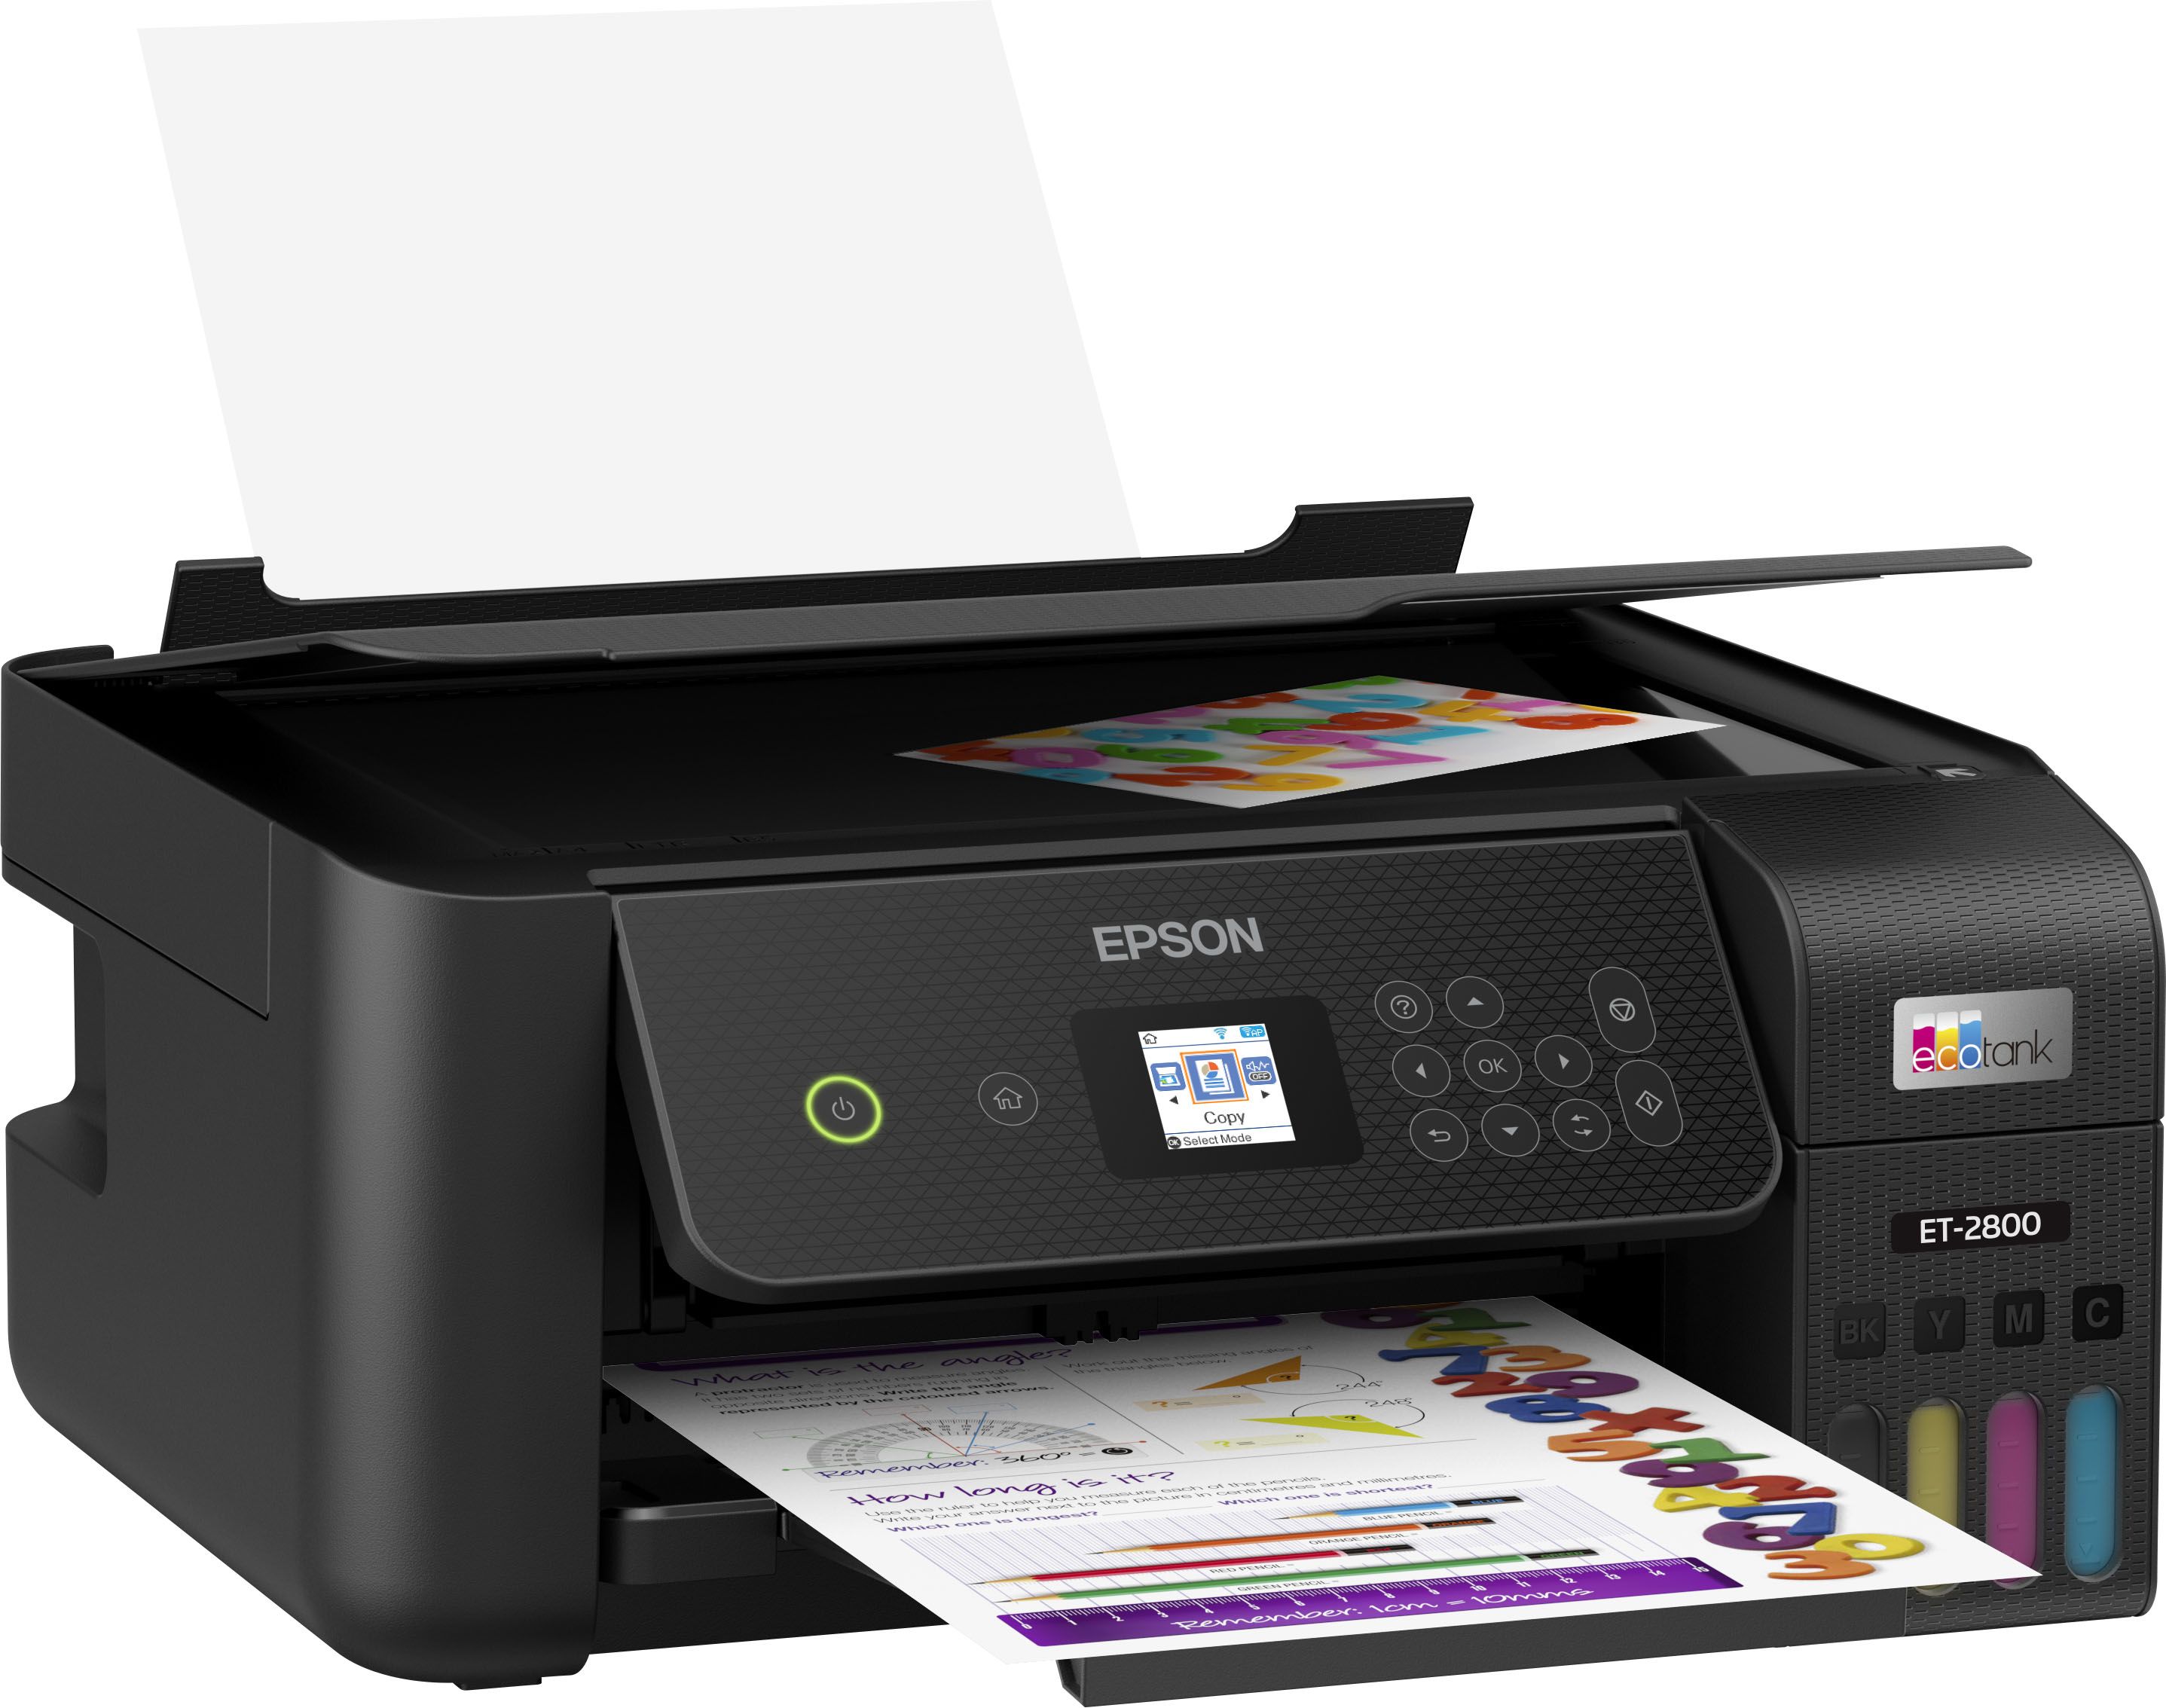 Angle View: Epson - EcoTank ET-2800 Wireless Color All-in-One Inkjet Cartridge-Free Supertank Printer - Black